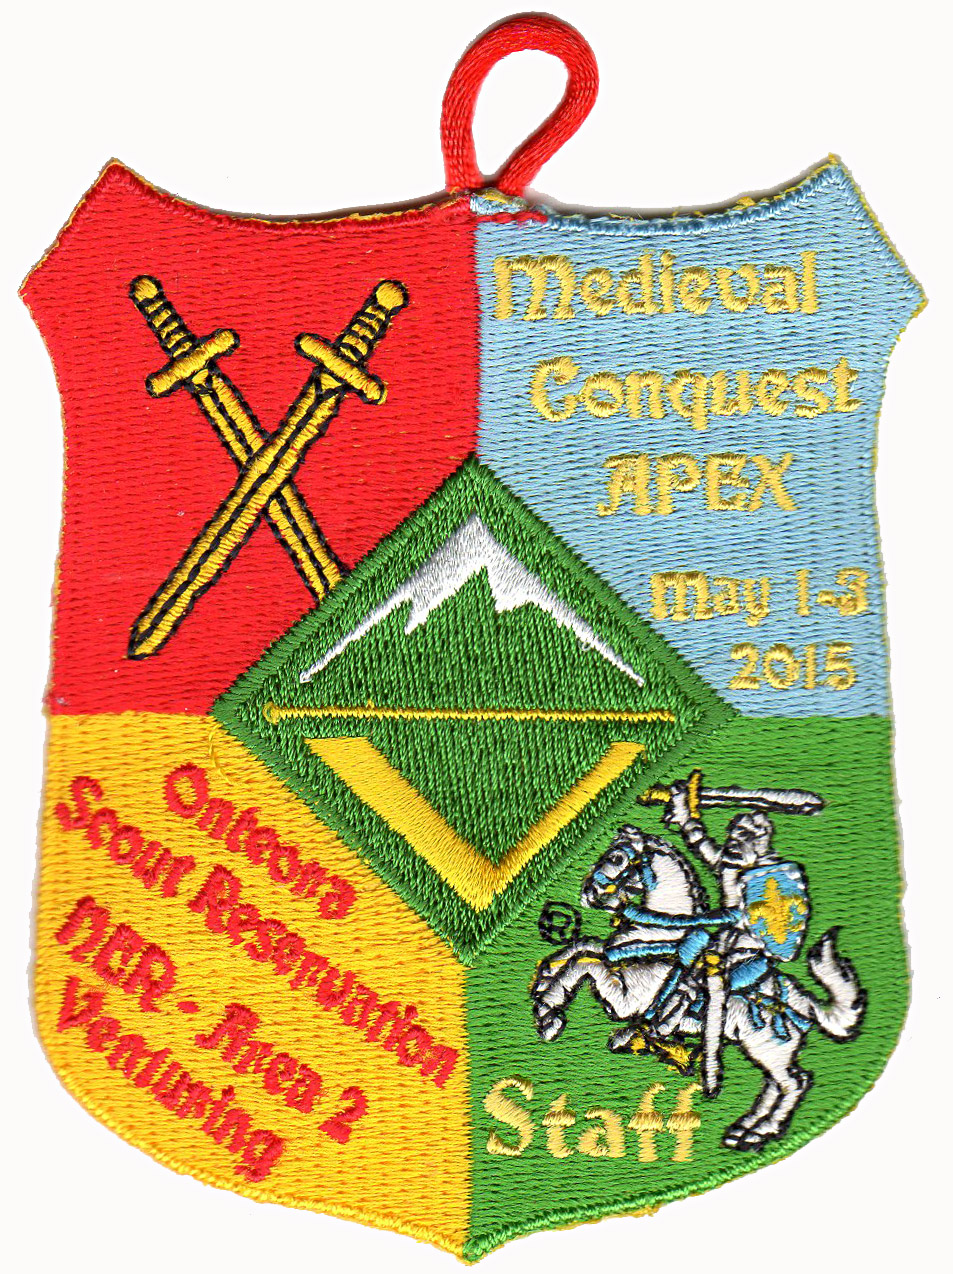 OSR Scoutmaster Merit Badge